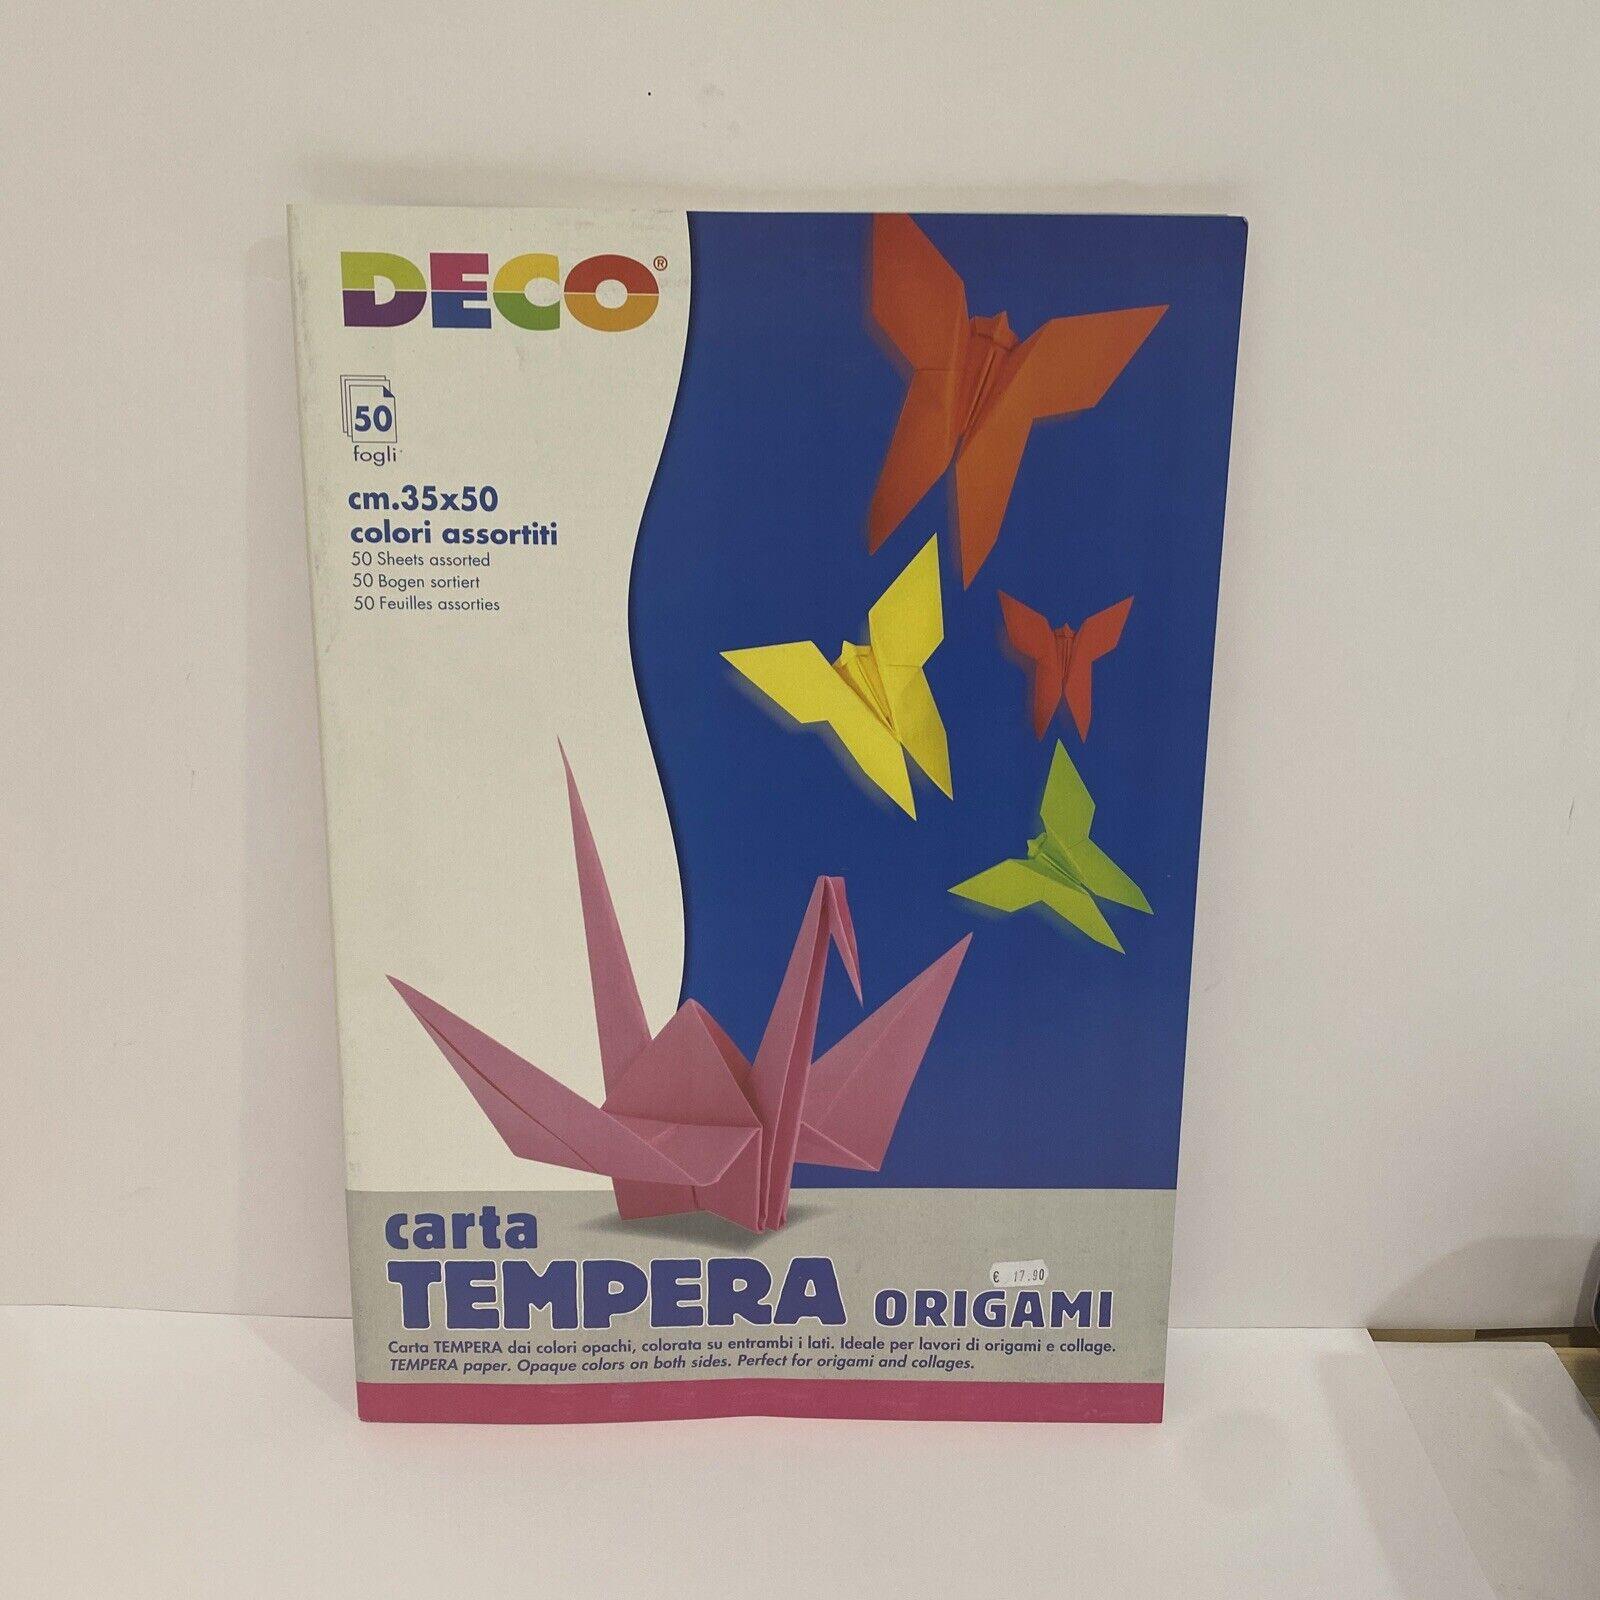 DECO - Carta Tempera per Origami